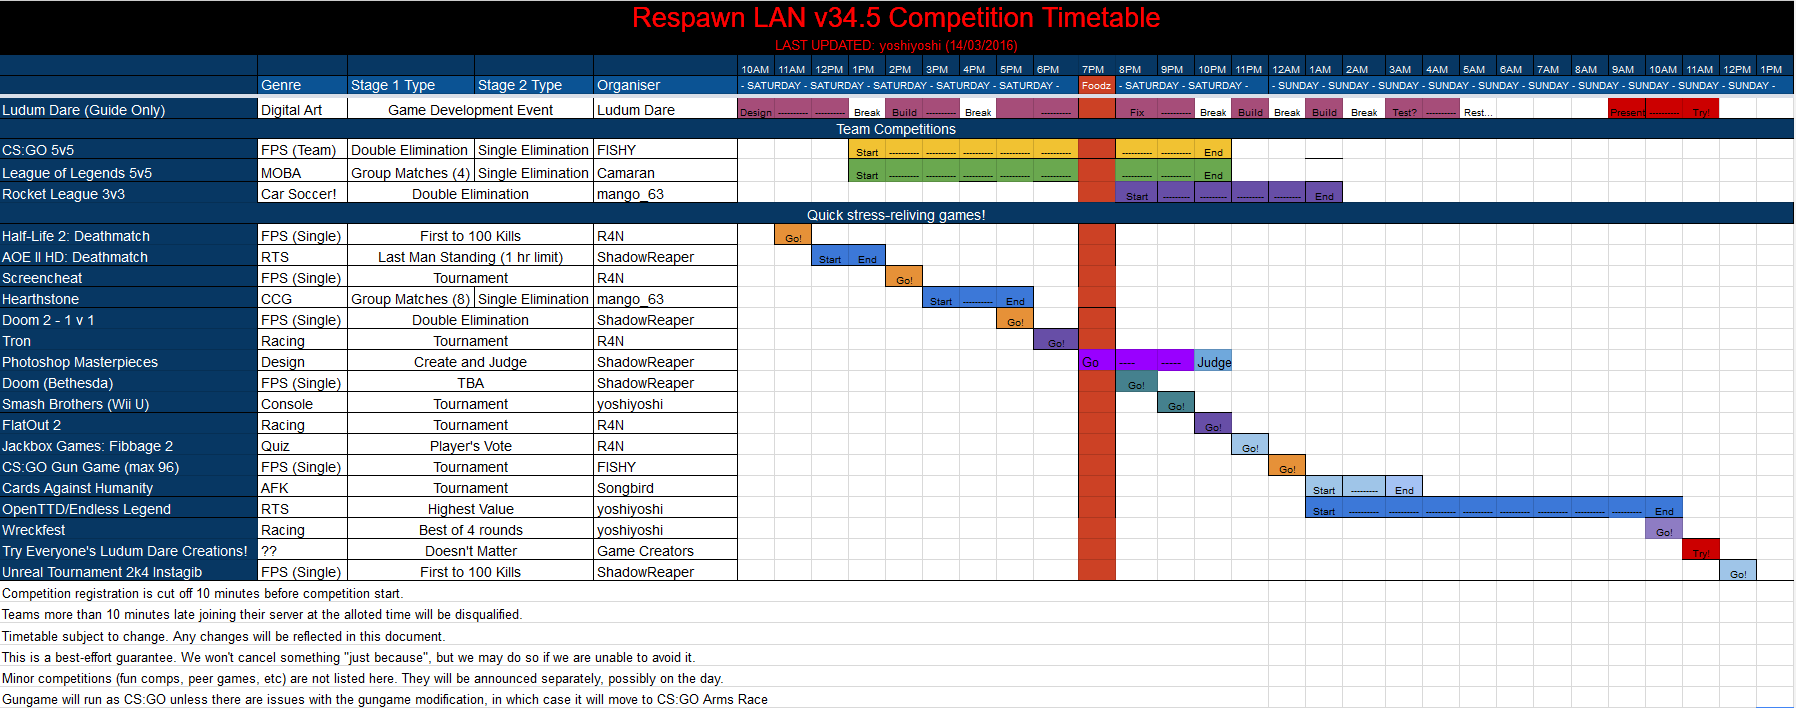 Respawn LAN v34.5 tournament timetable image